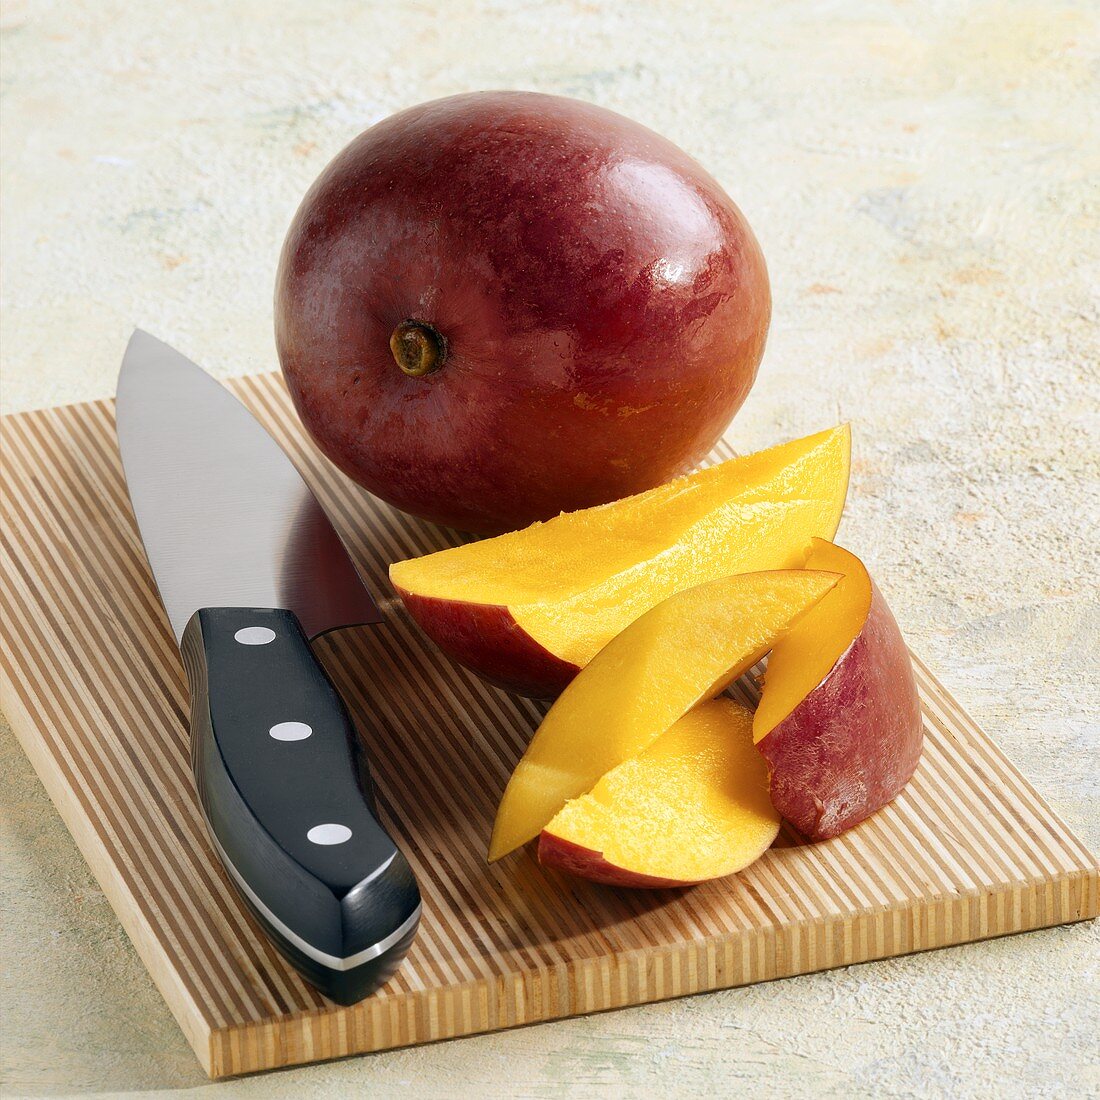 Whole Ripe Mango on a Cutting Board with Mango Slices, Knife